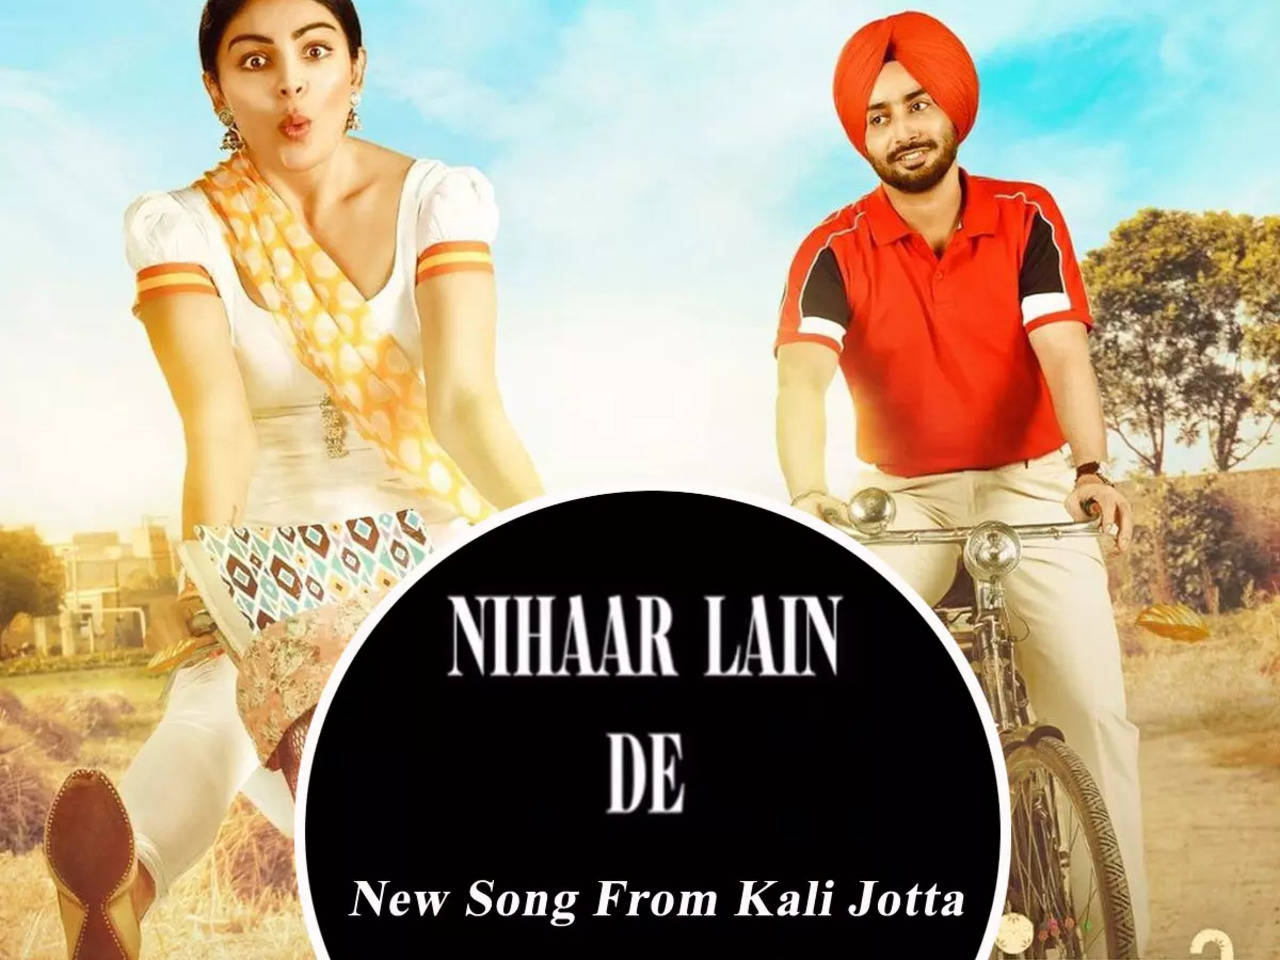 Teaser of 'Nihaar Lain De' from 'Kali Jotta' gives a peek at Neeru Bajwa  and Satinder Sartaaj's chemistry | Punjabi Movie News - Times of India